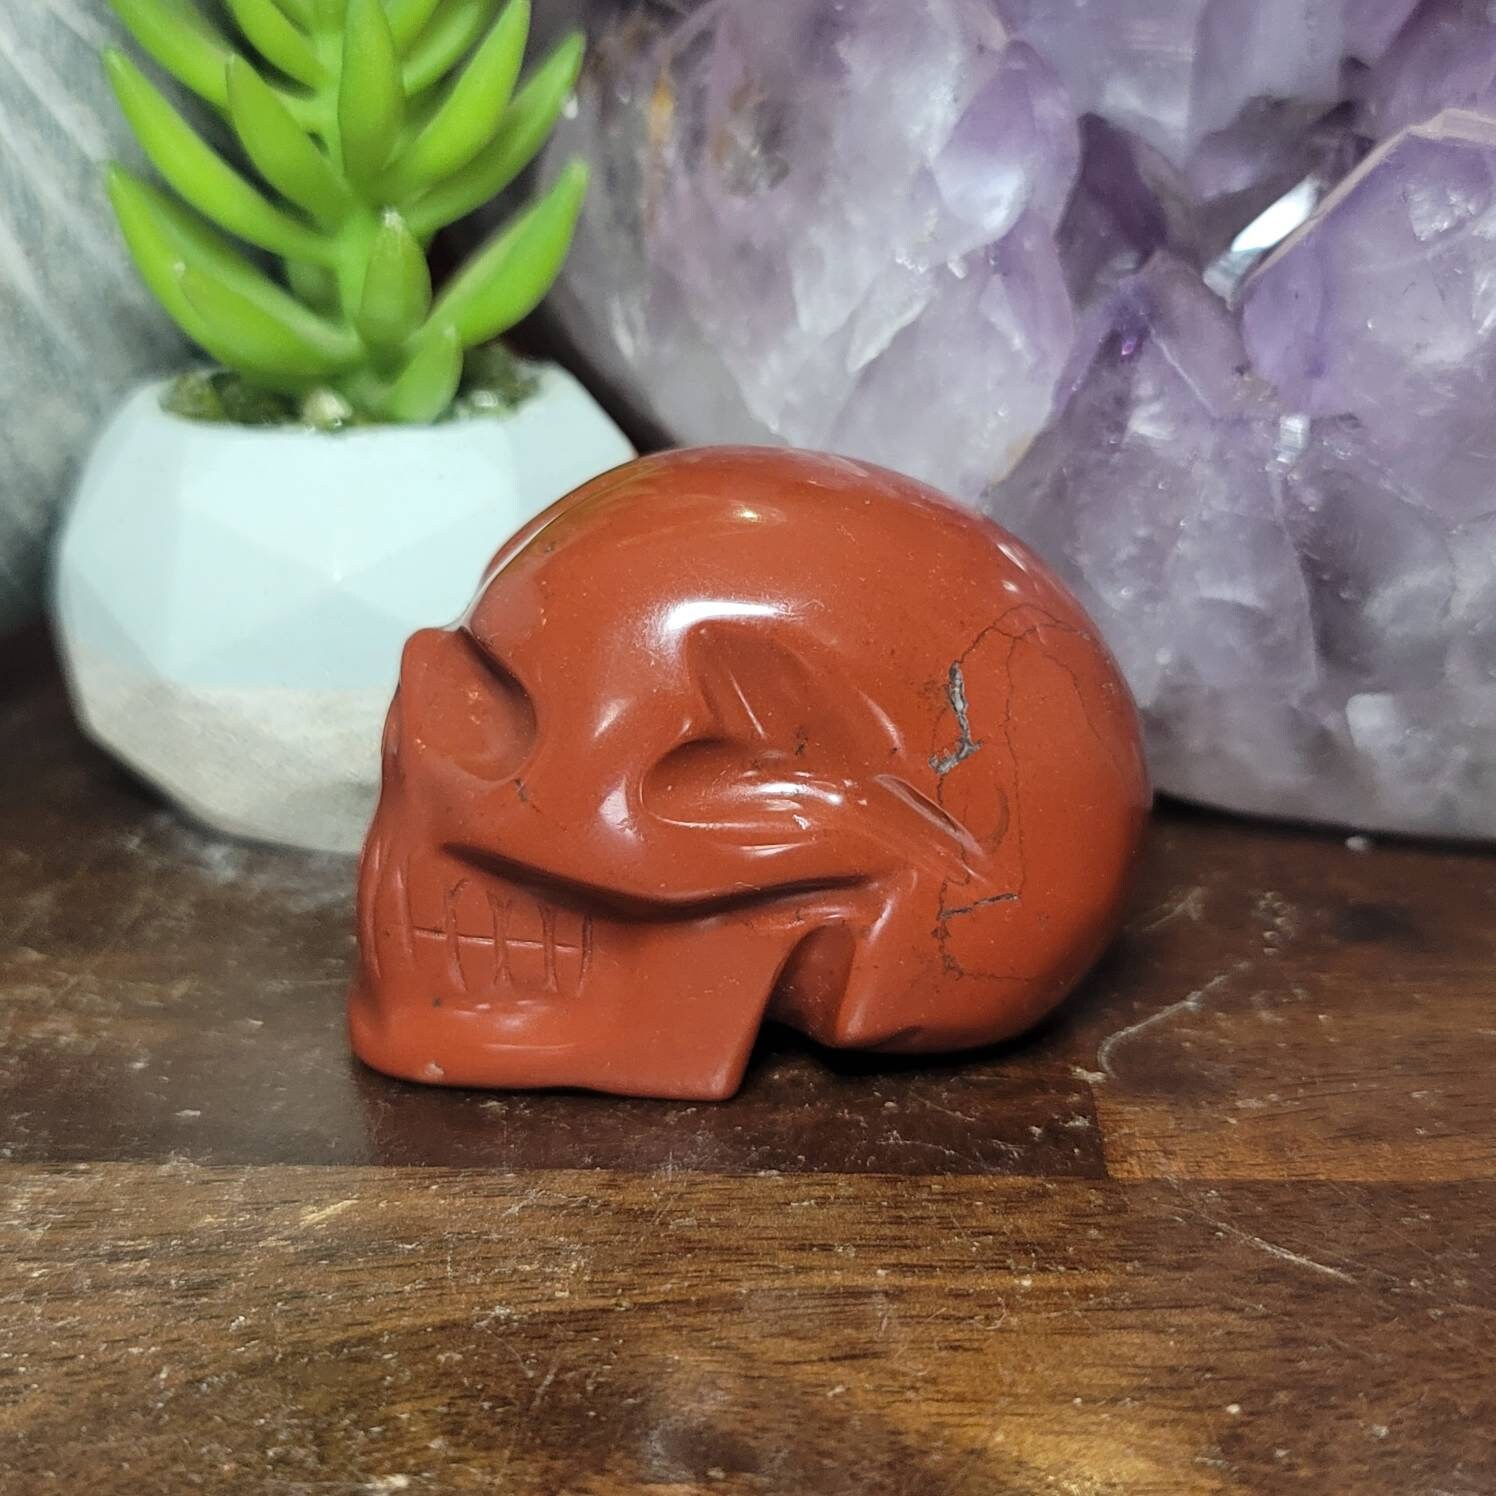 Skull Red Jasper Carving 2.2 inch Hand Carved Gemstone Crystal Skull #e1